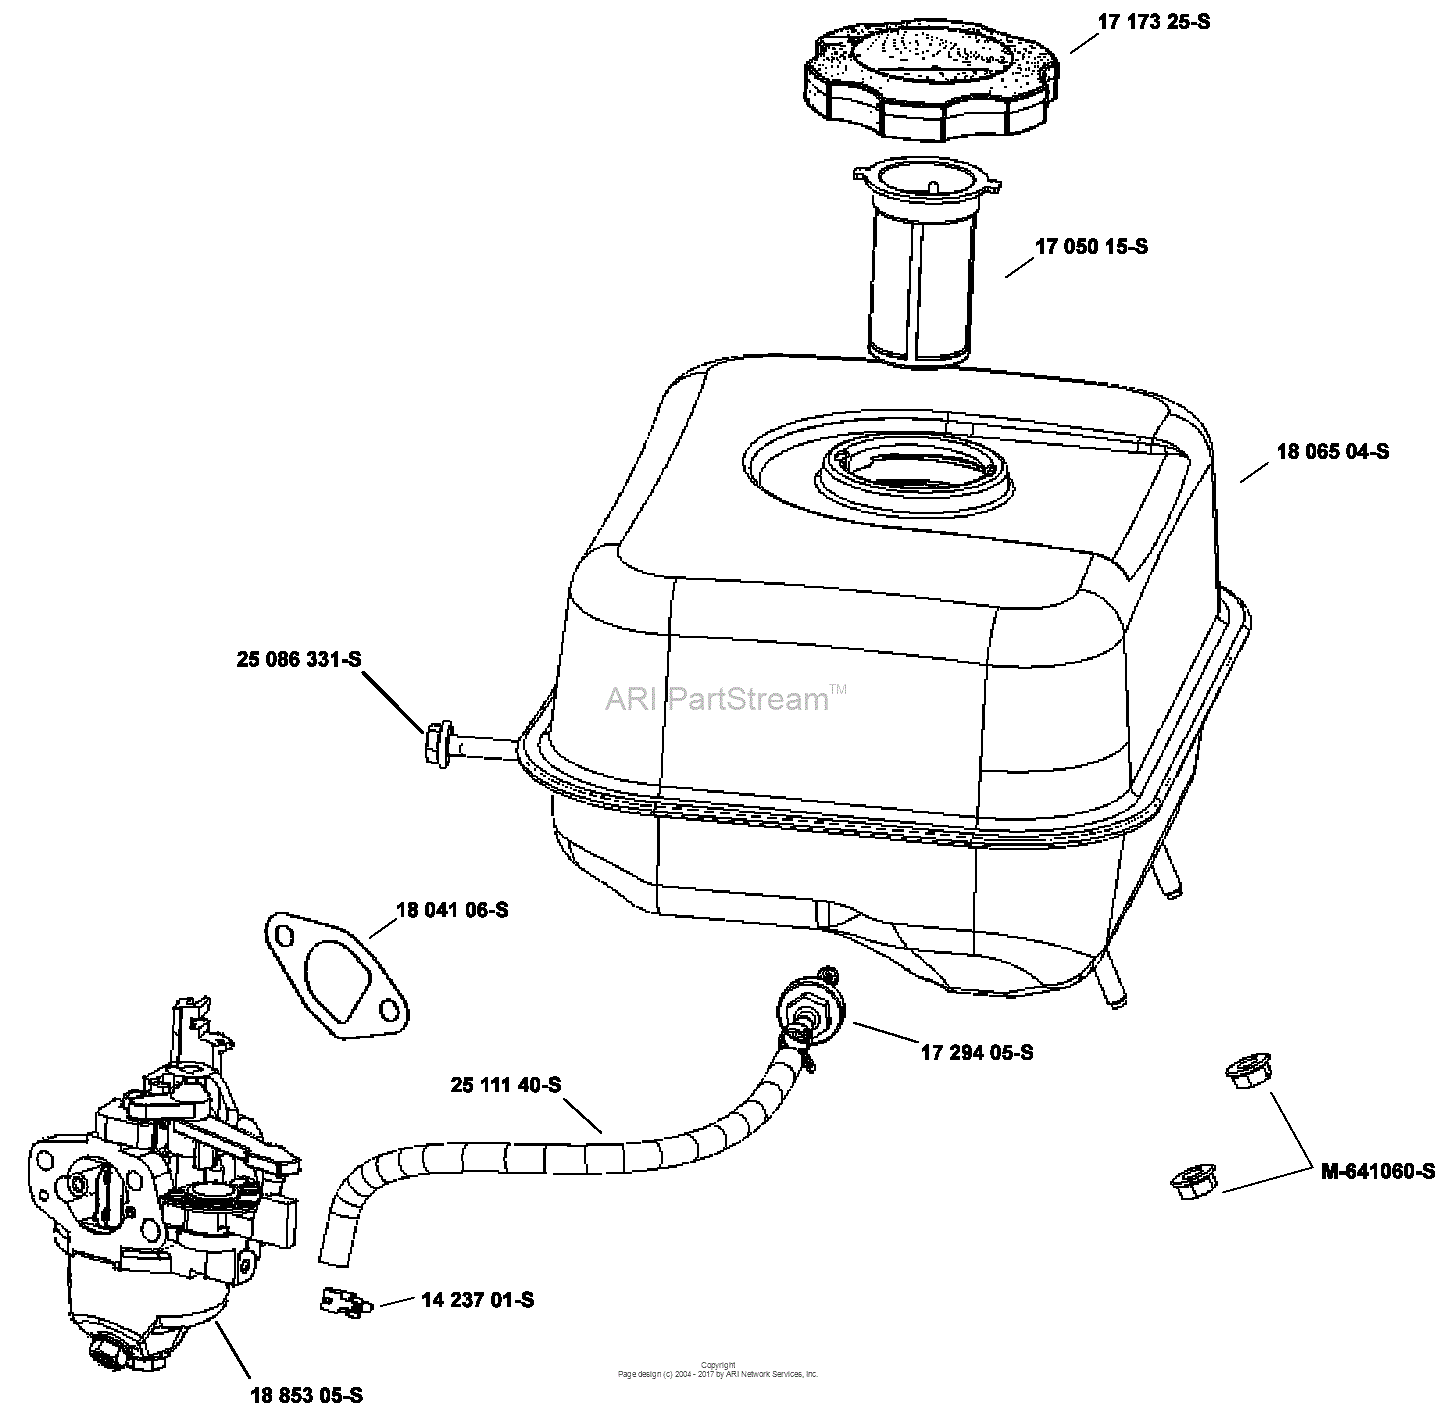 Basic Car Parts Diagram - Diagram Media